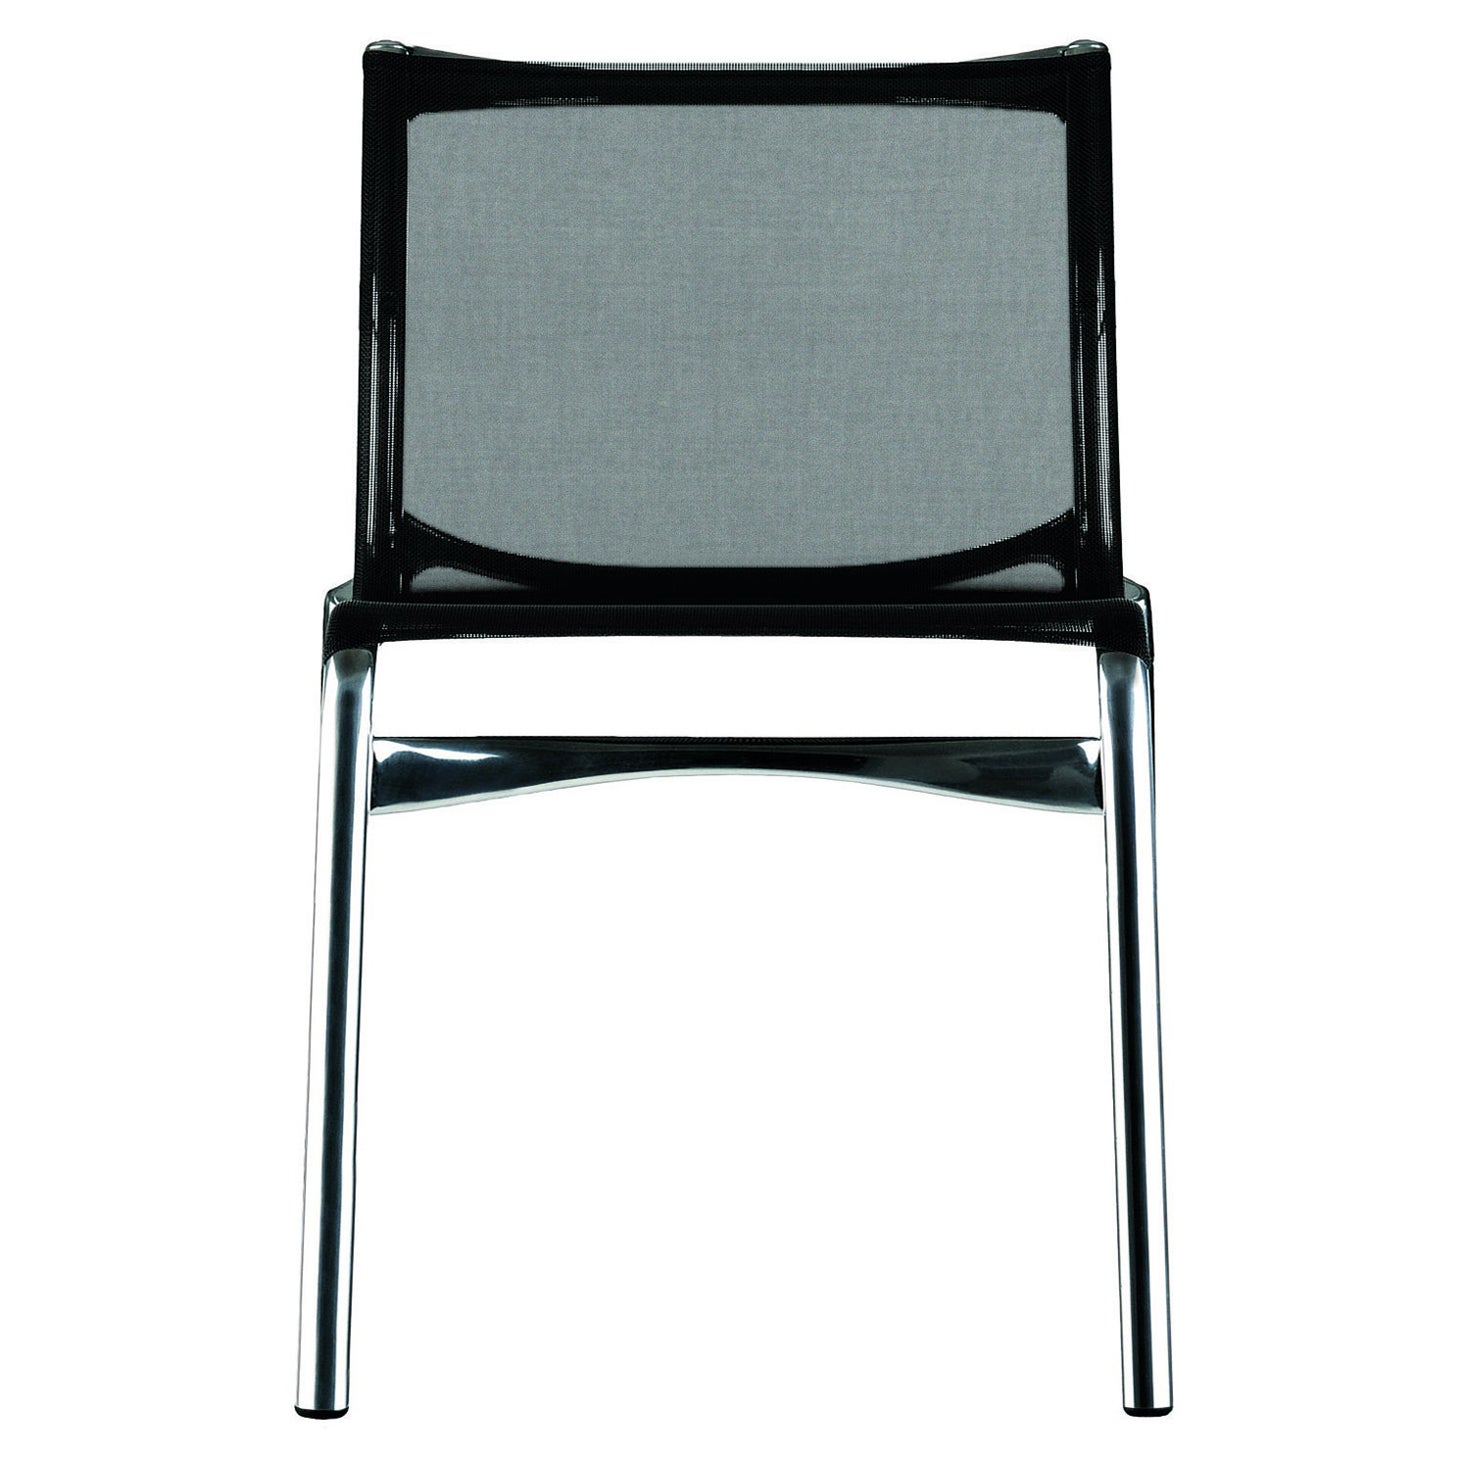 Alias Frame 52 Stuhl in schwarzem Netzsitz & schwarzem Gestell mit poliertem Aluminiumrahmen